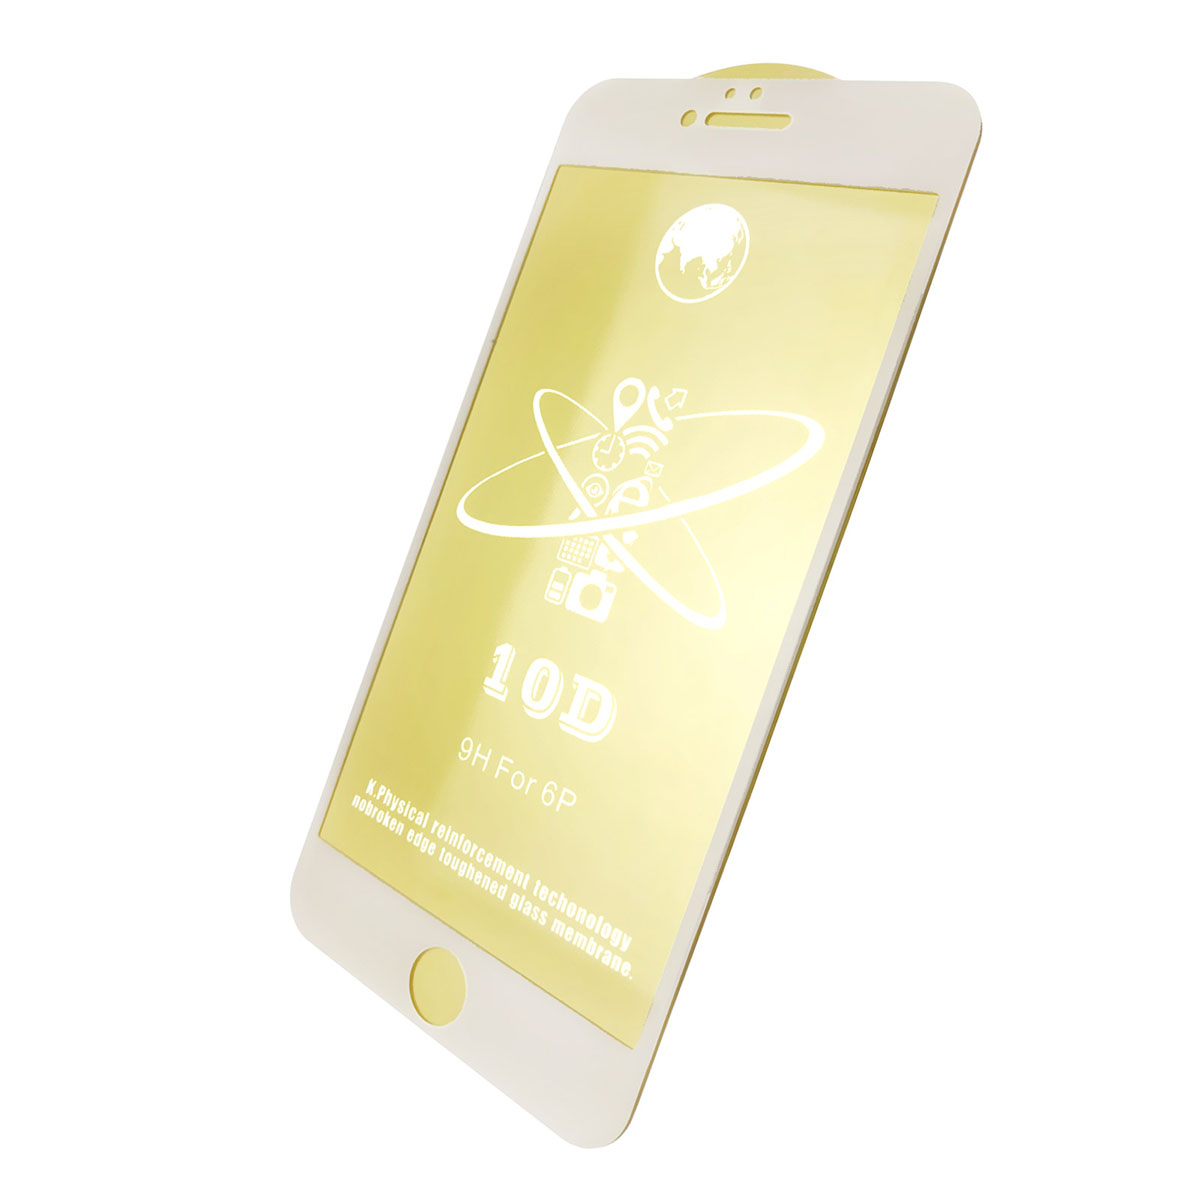 Защитное стекло 10D для APPLE iPhone 6 Plus, iPhone 6G Plus, iPhone 6S Plus, цвет канта белый.